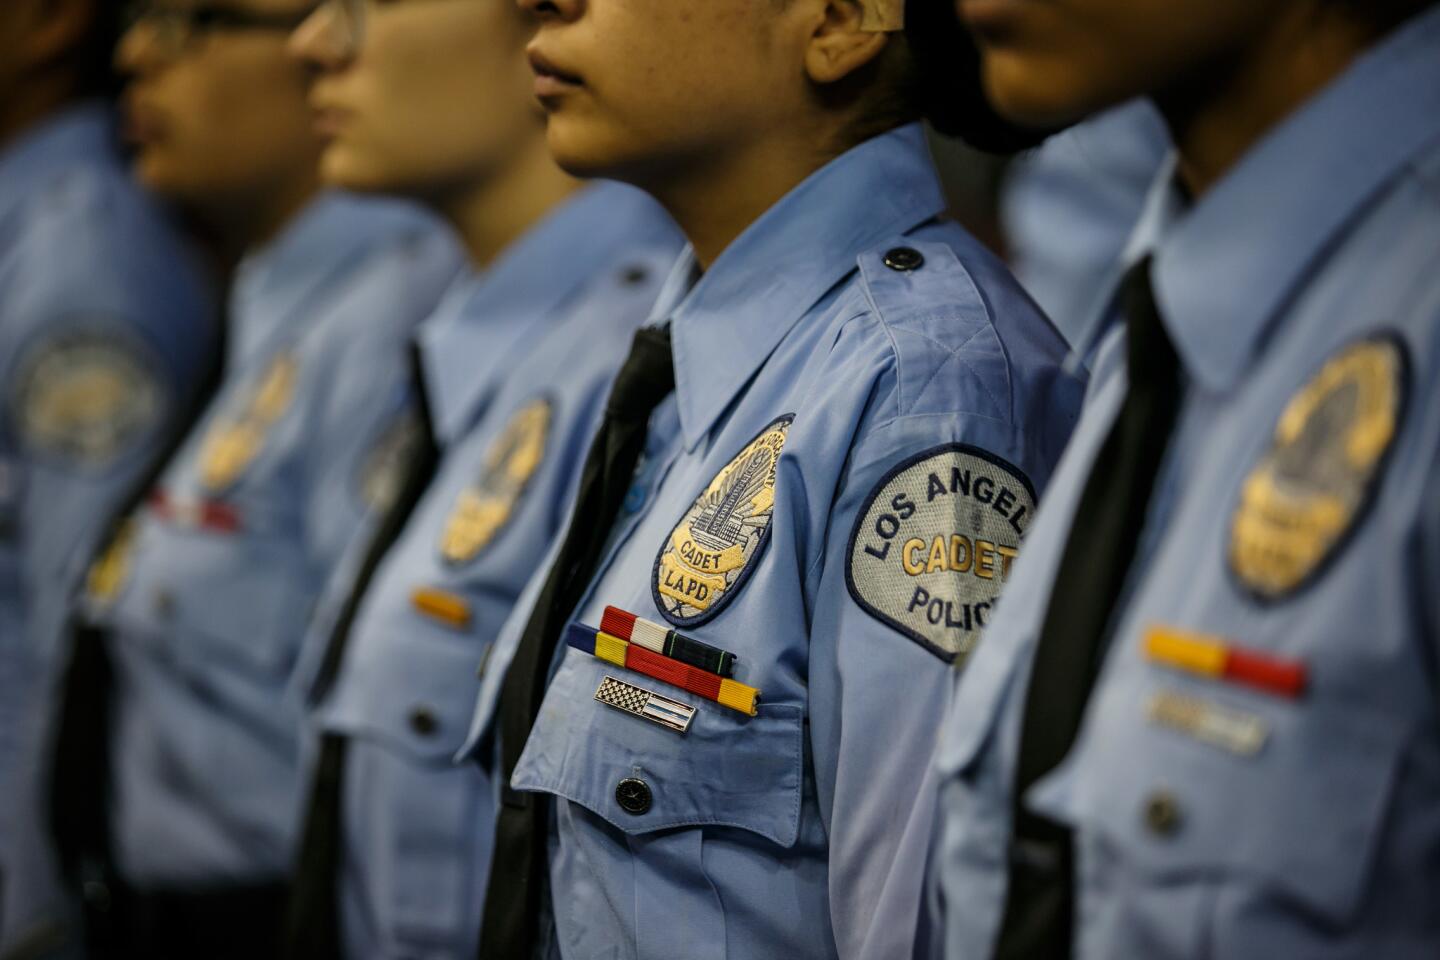 LAPD cadet graduation